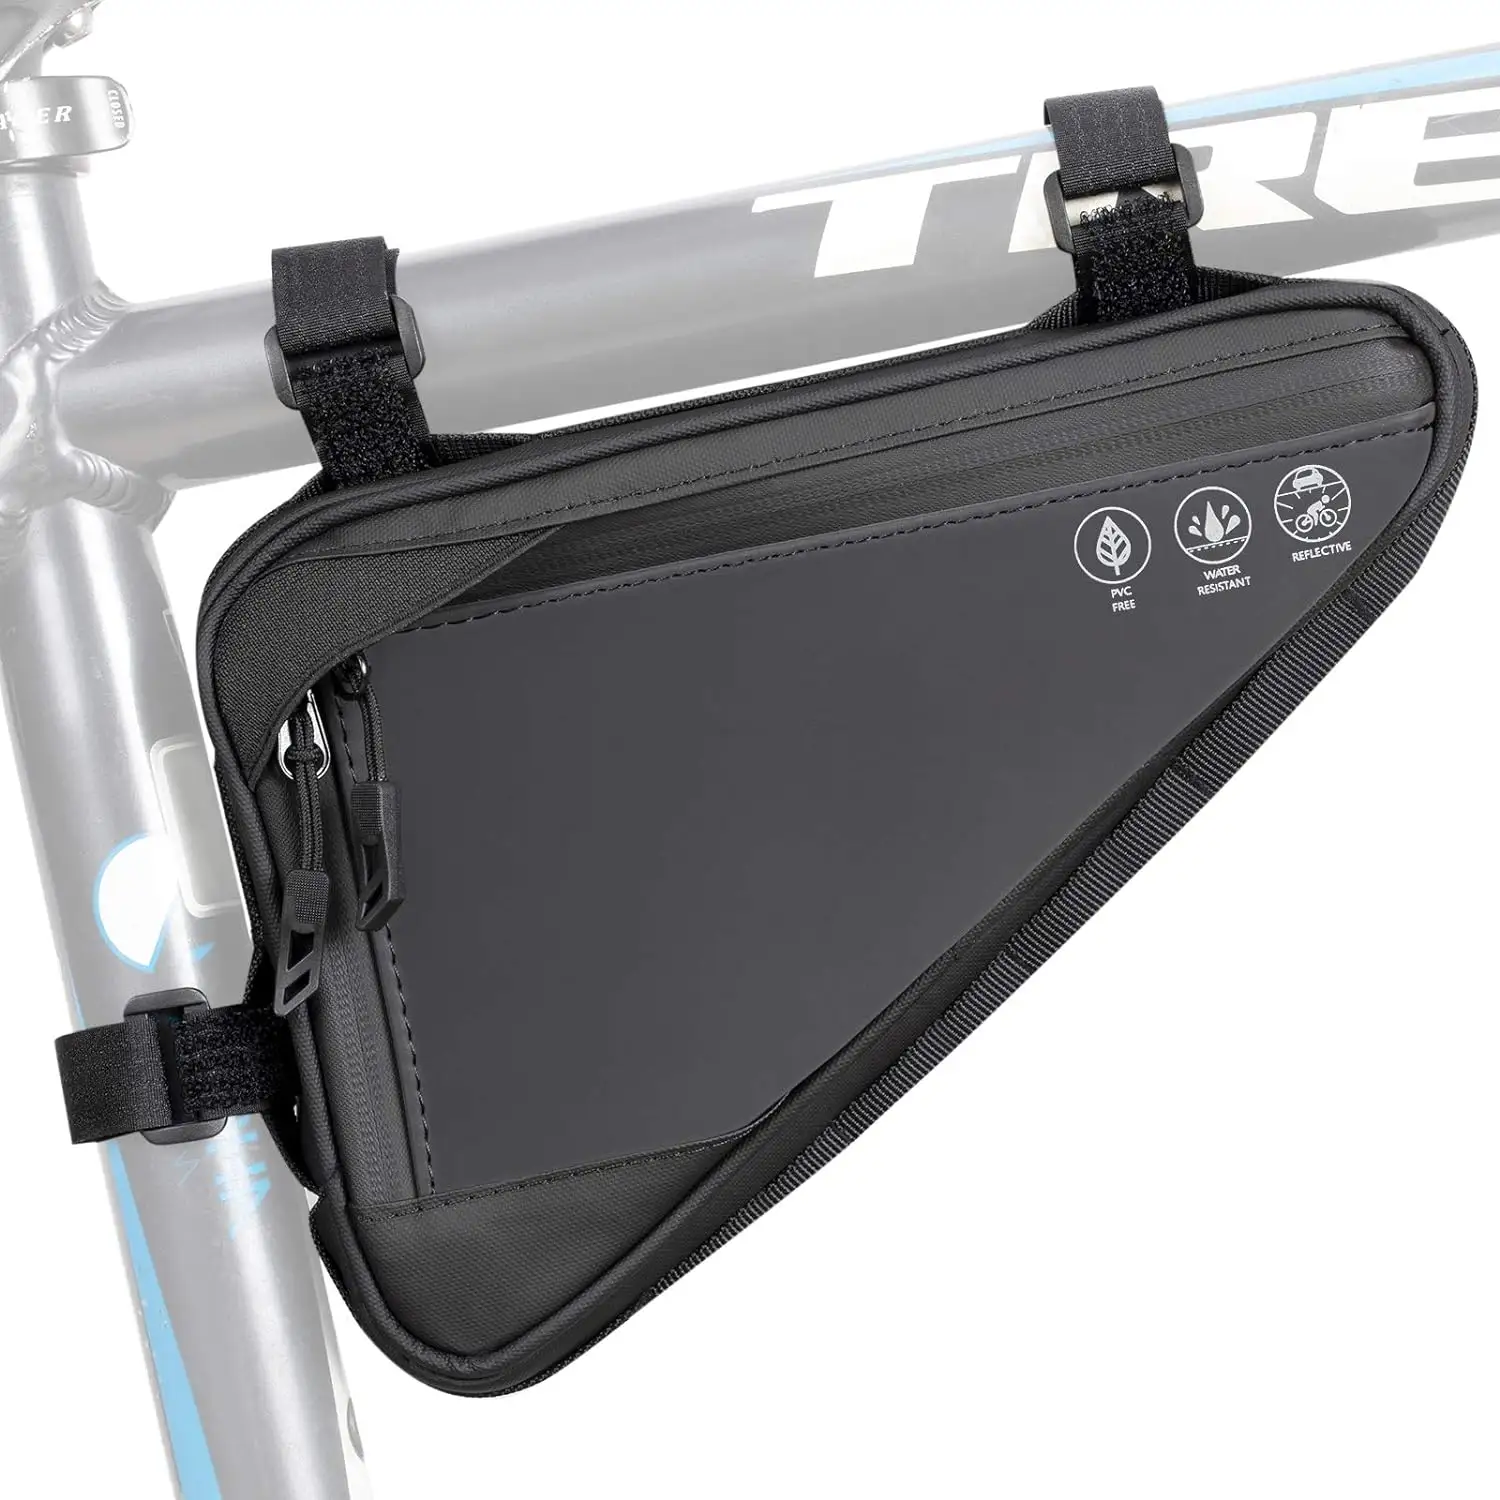 Bolsa triangular para cuadro de bicicleta OEM de alta calidad, bolsa de herramientas impermeable para manillar para bicicleta eléctrica de montaña, eBike, ciclismo, características duraderas